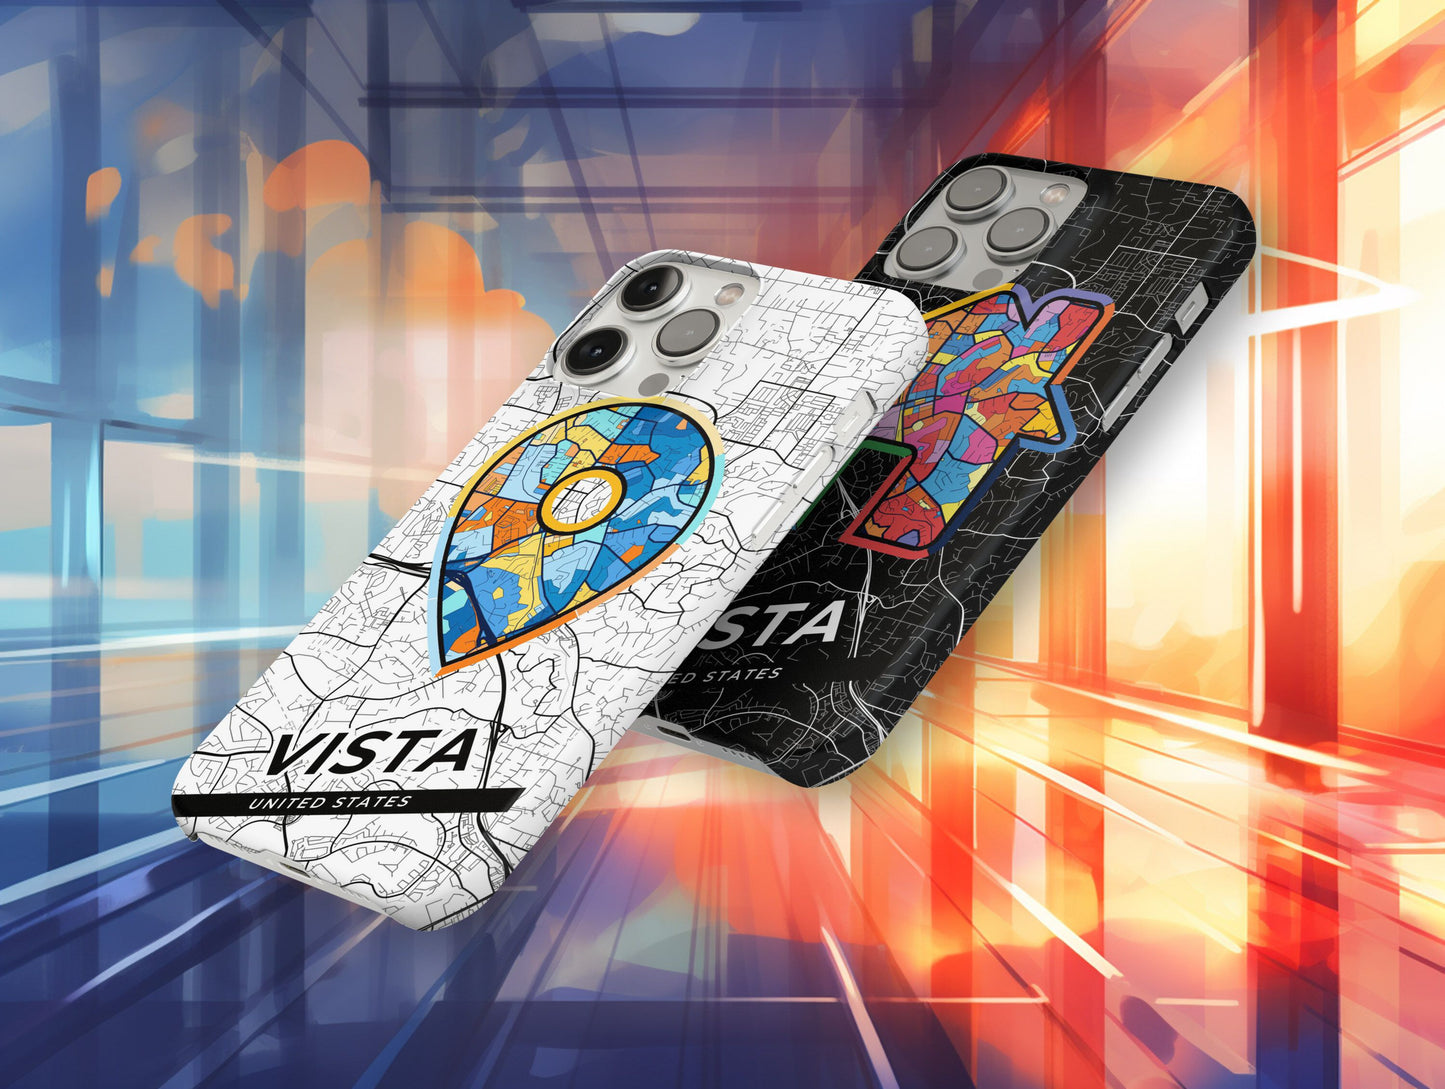 Vista California slim phone case with colorful icon